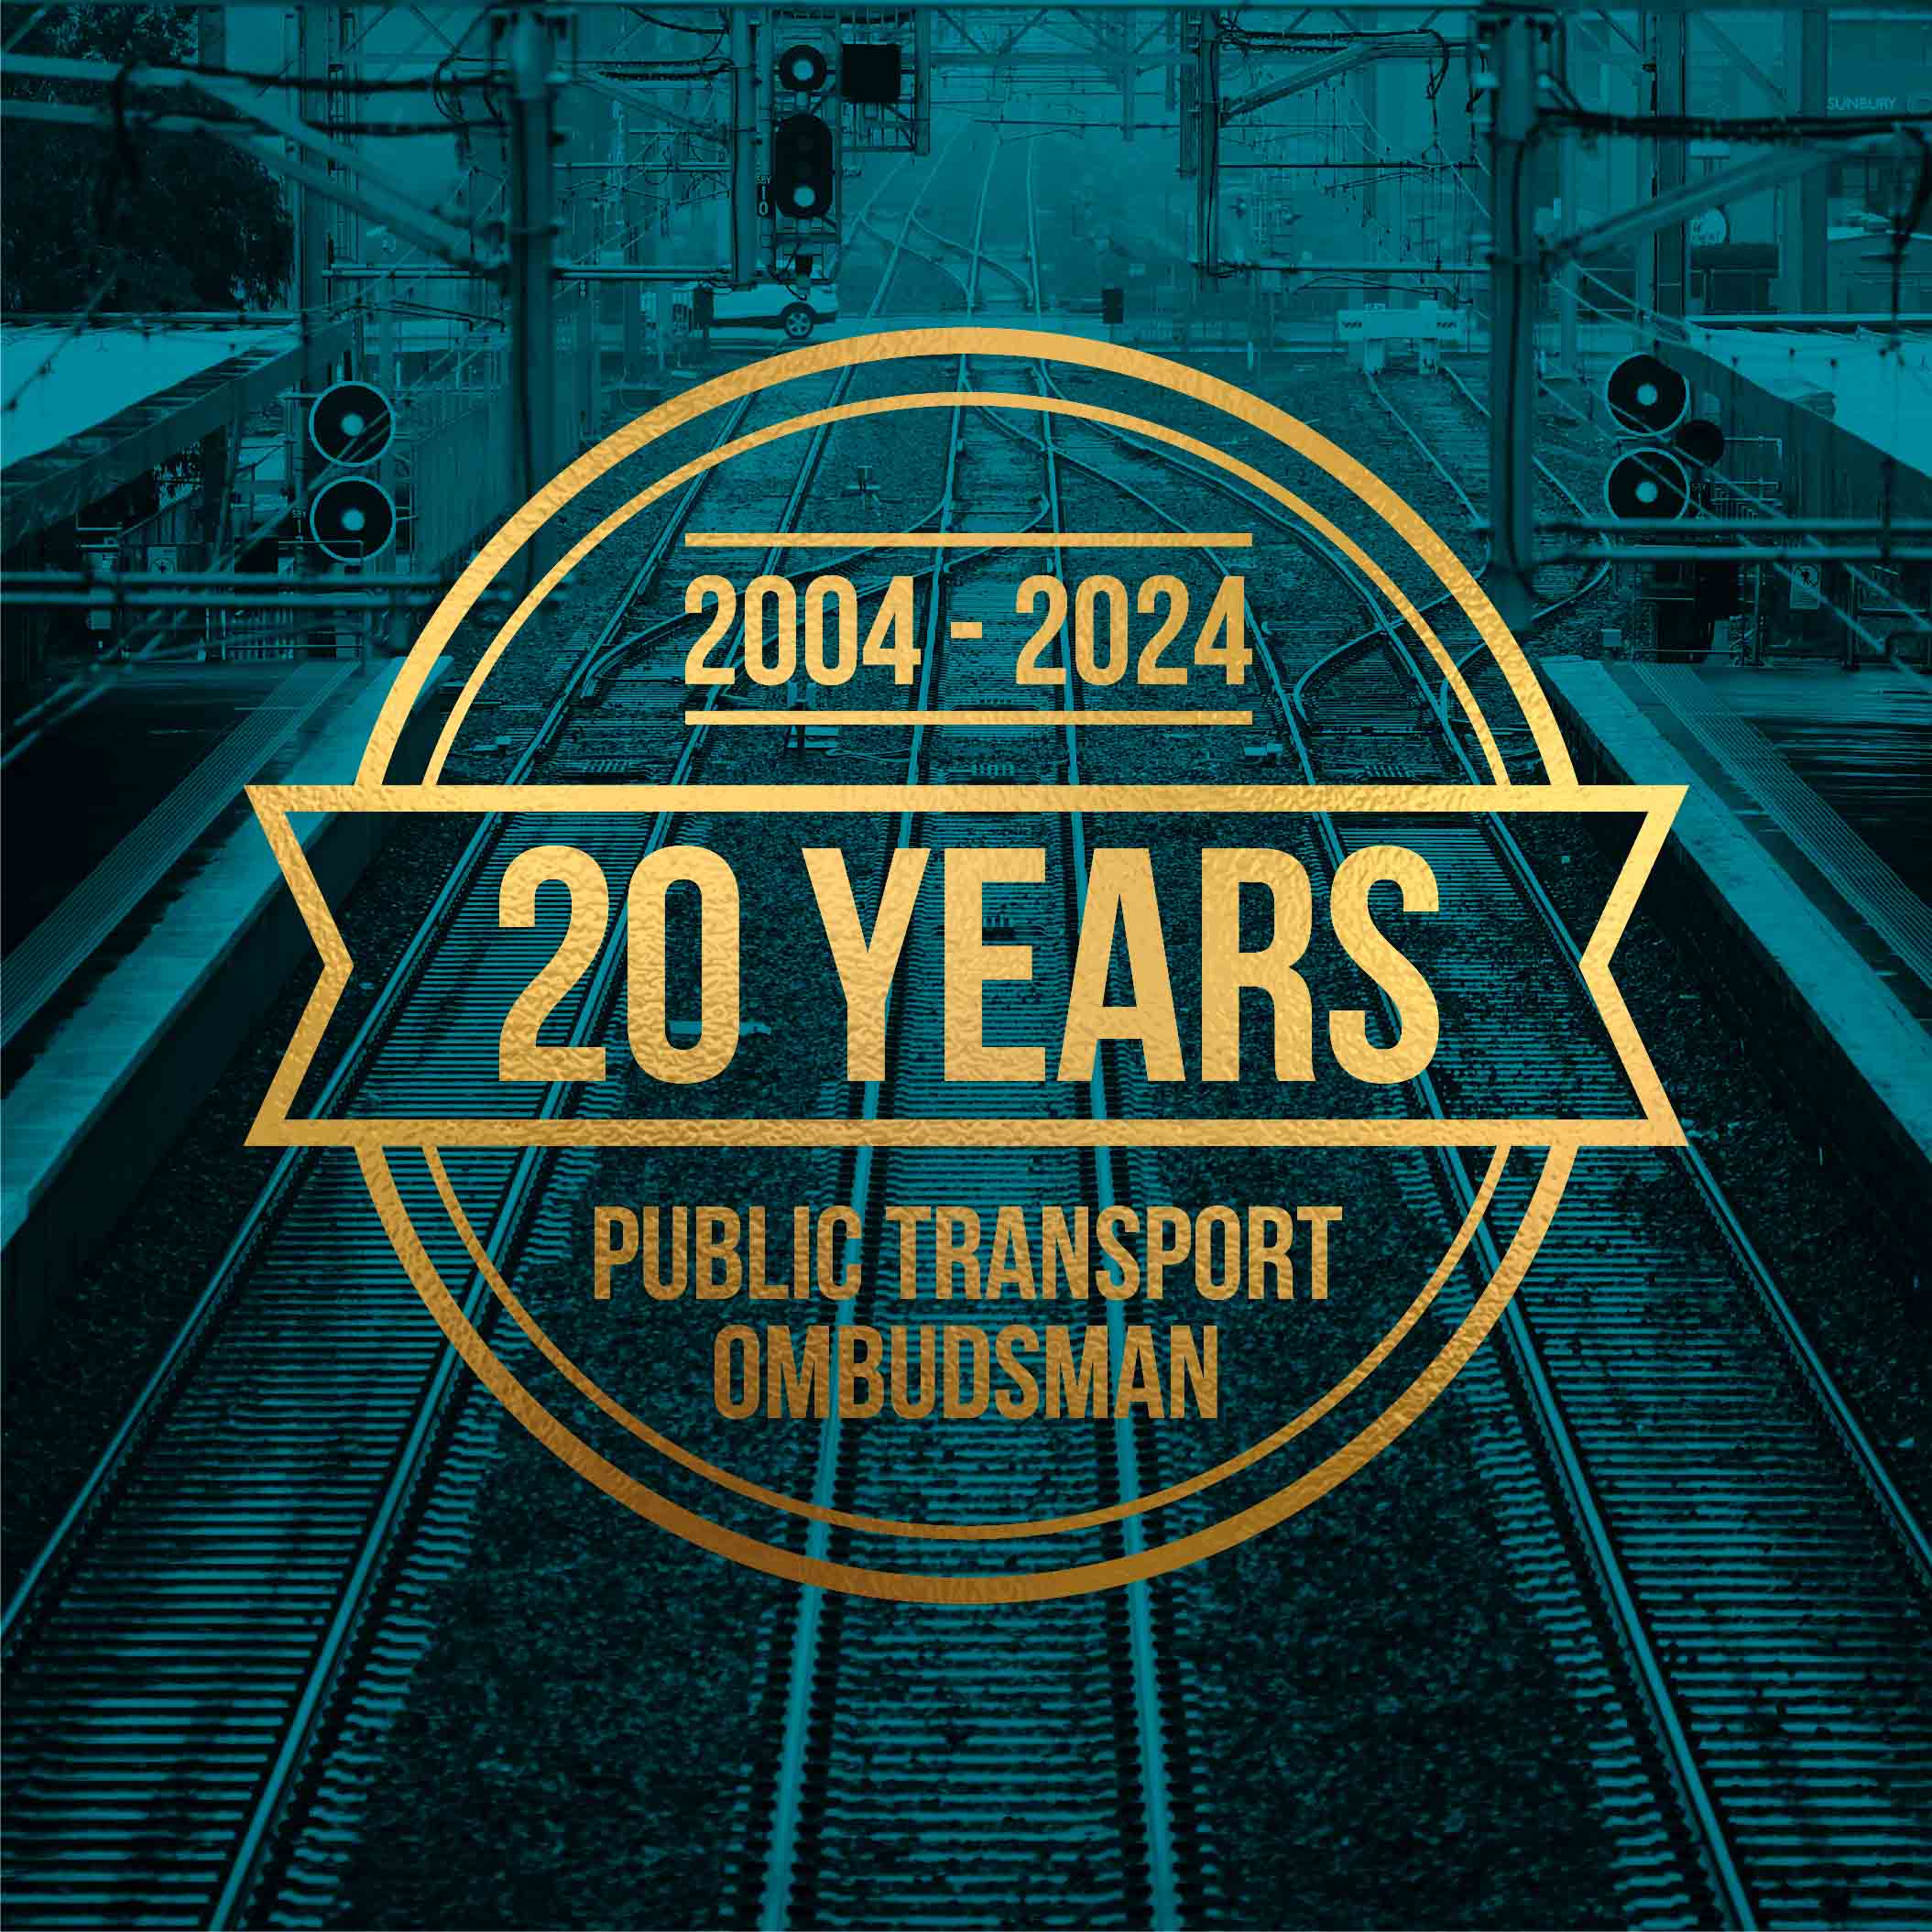 2004-2024, 20 Years Public Transport Ombudsman